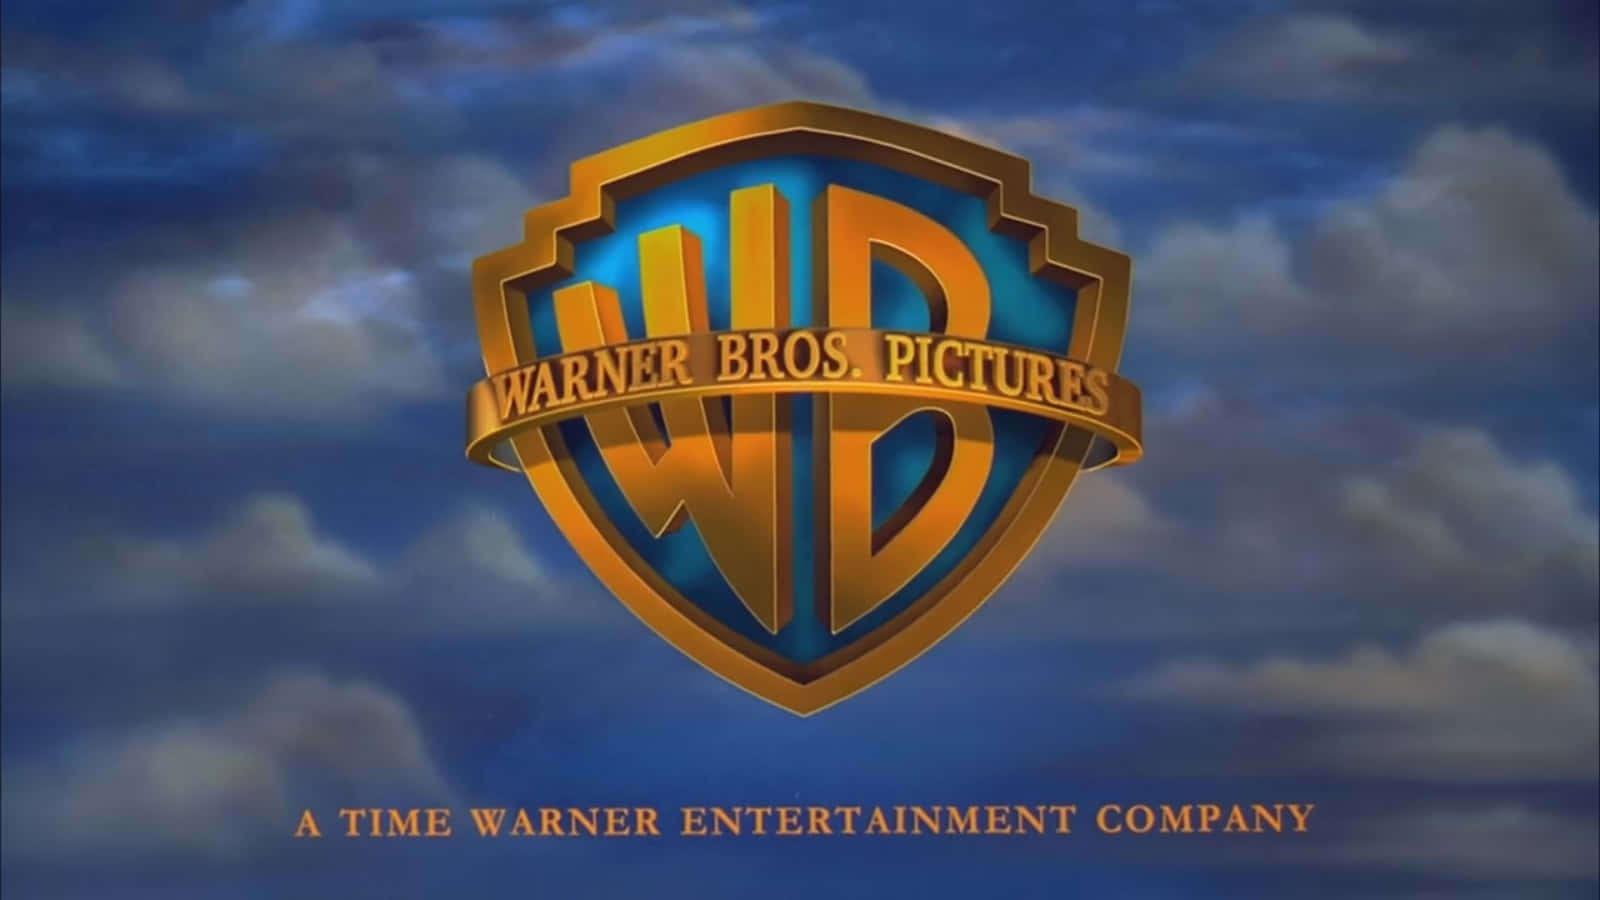 Hazy Warner Bros Picture